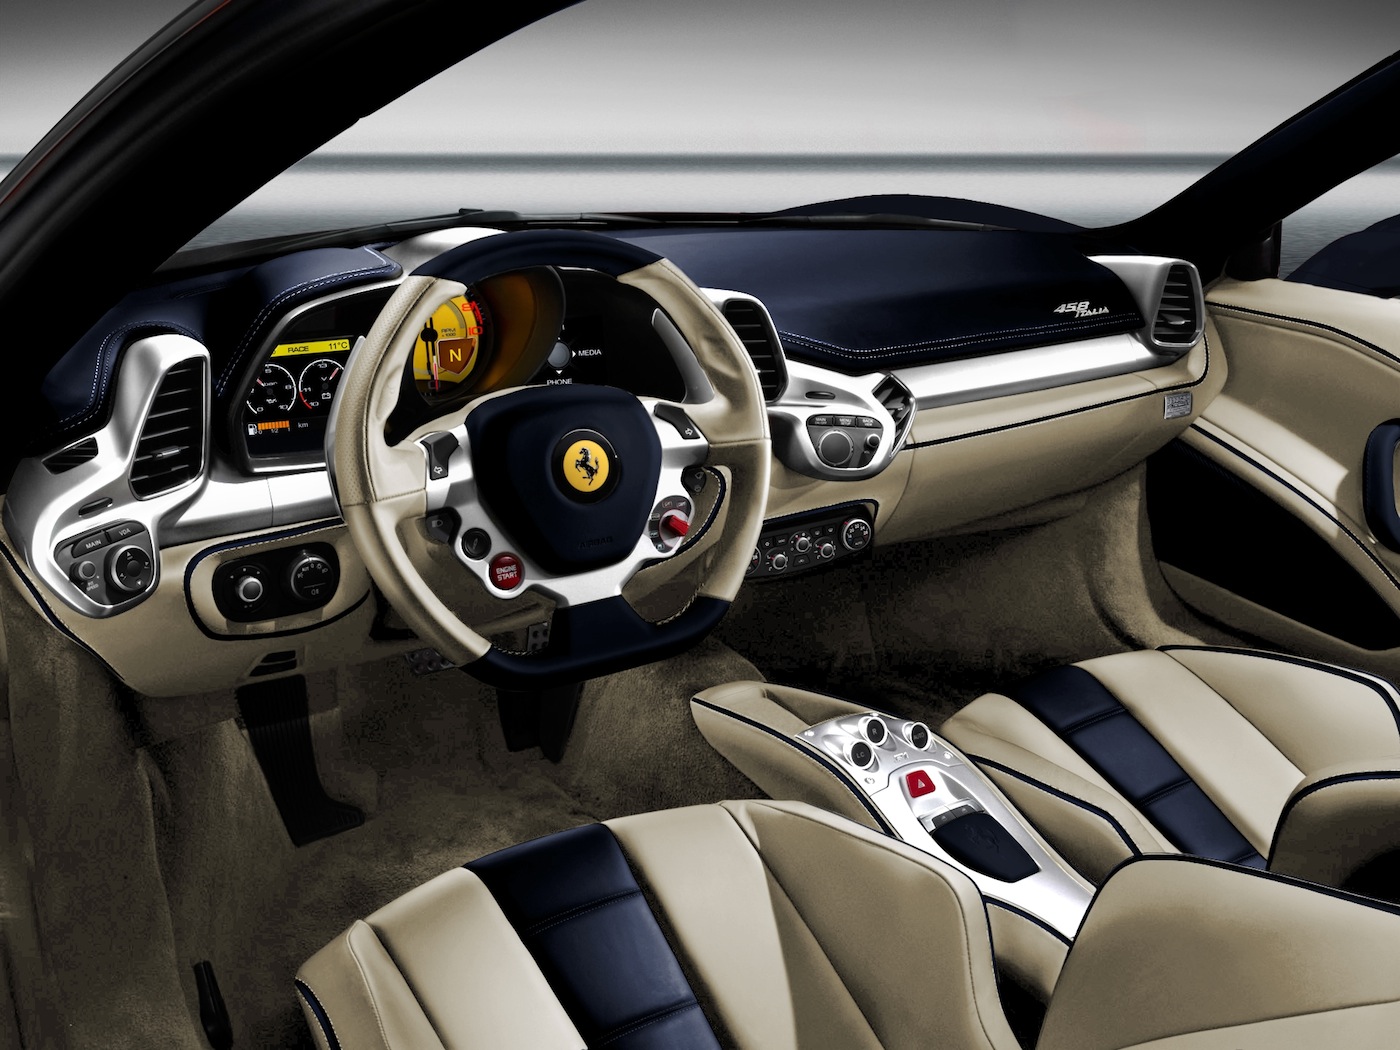 Ferrari Tailor Made program - photos | CarAdvice